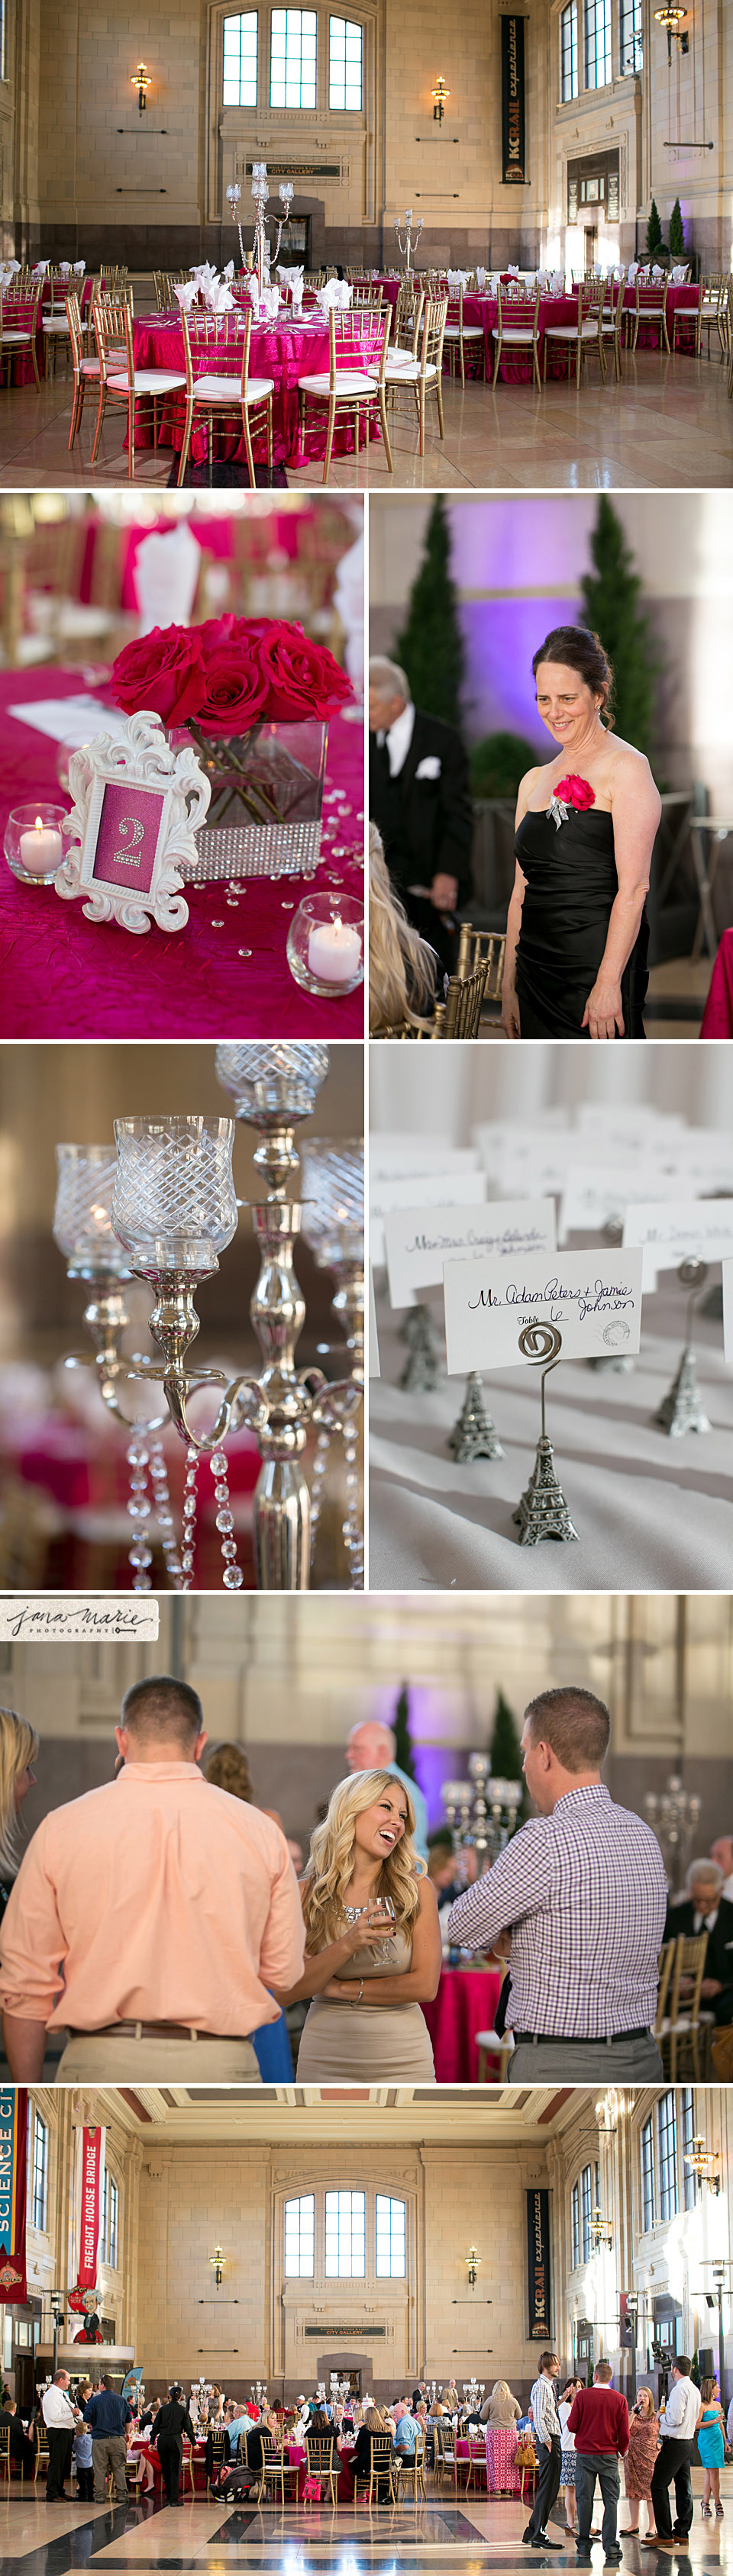 Wedding details, Union Station Receptions, KC venues, Midwest weddings, Pink decor, Eifle Tower place cards